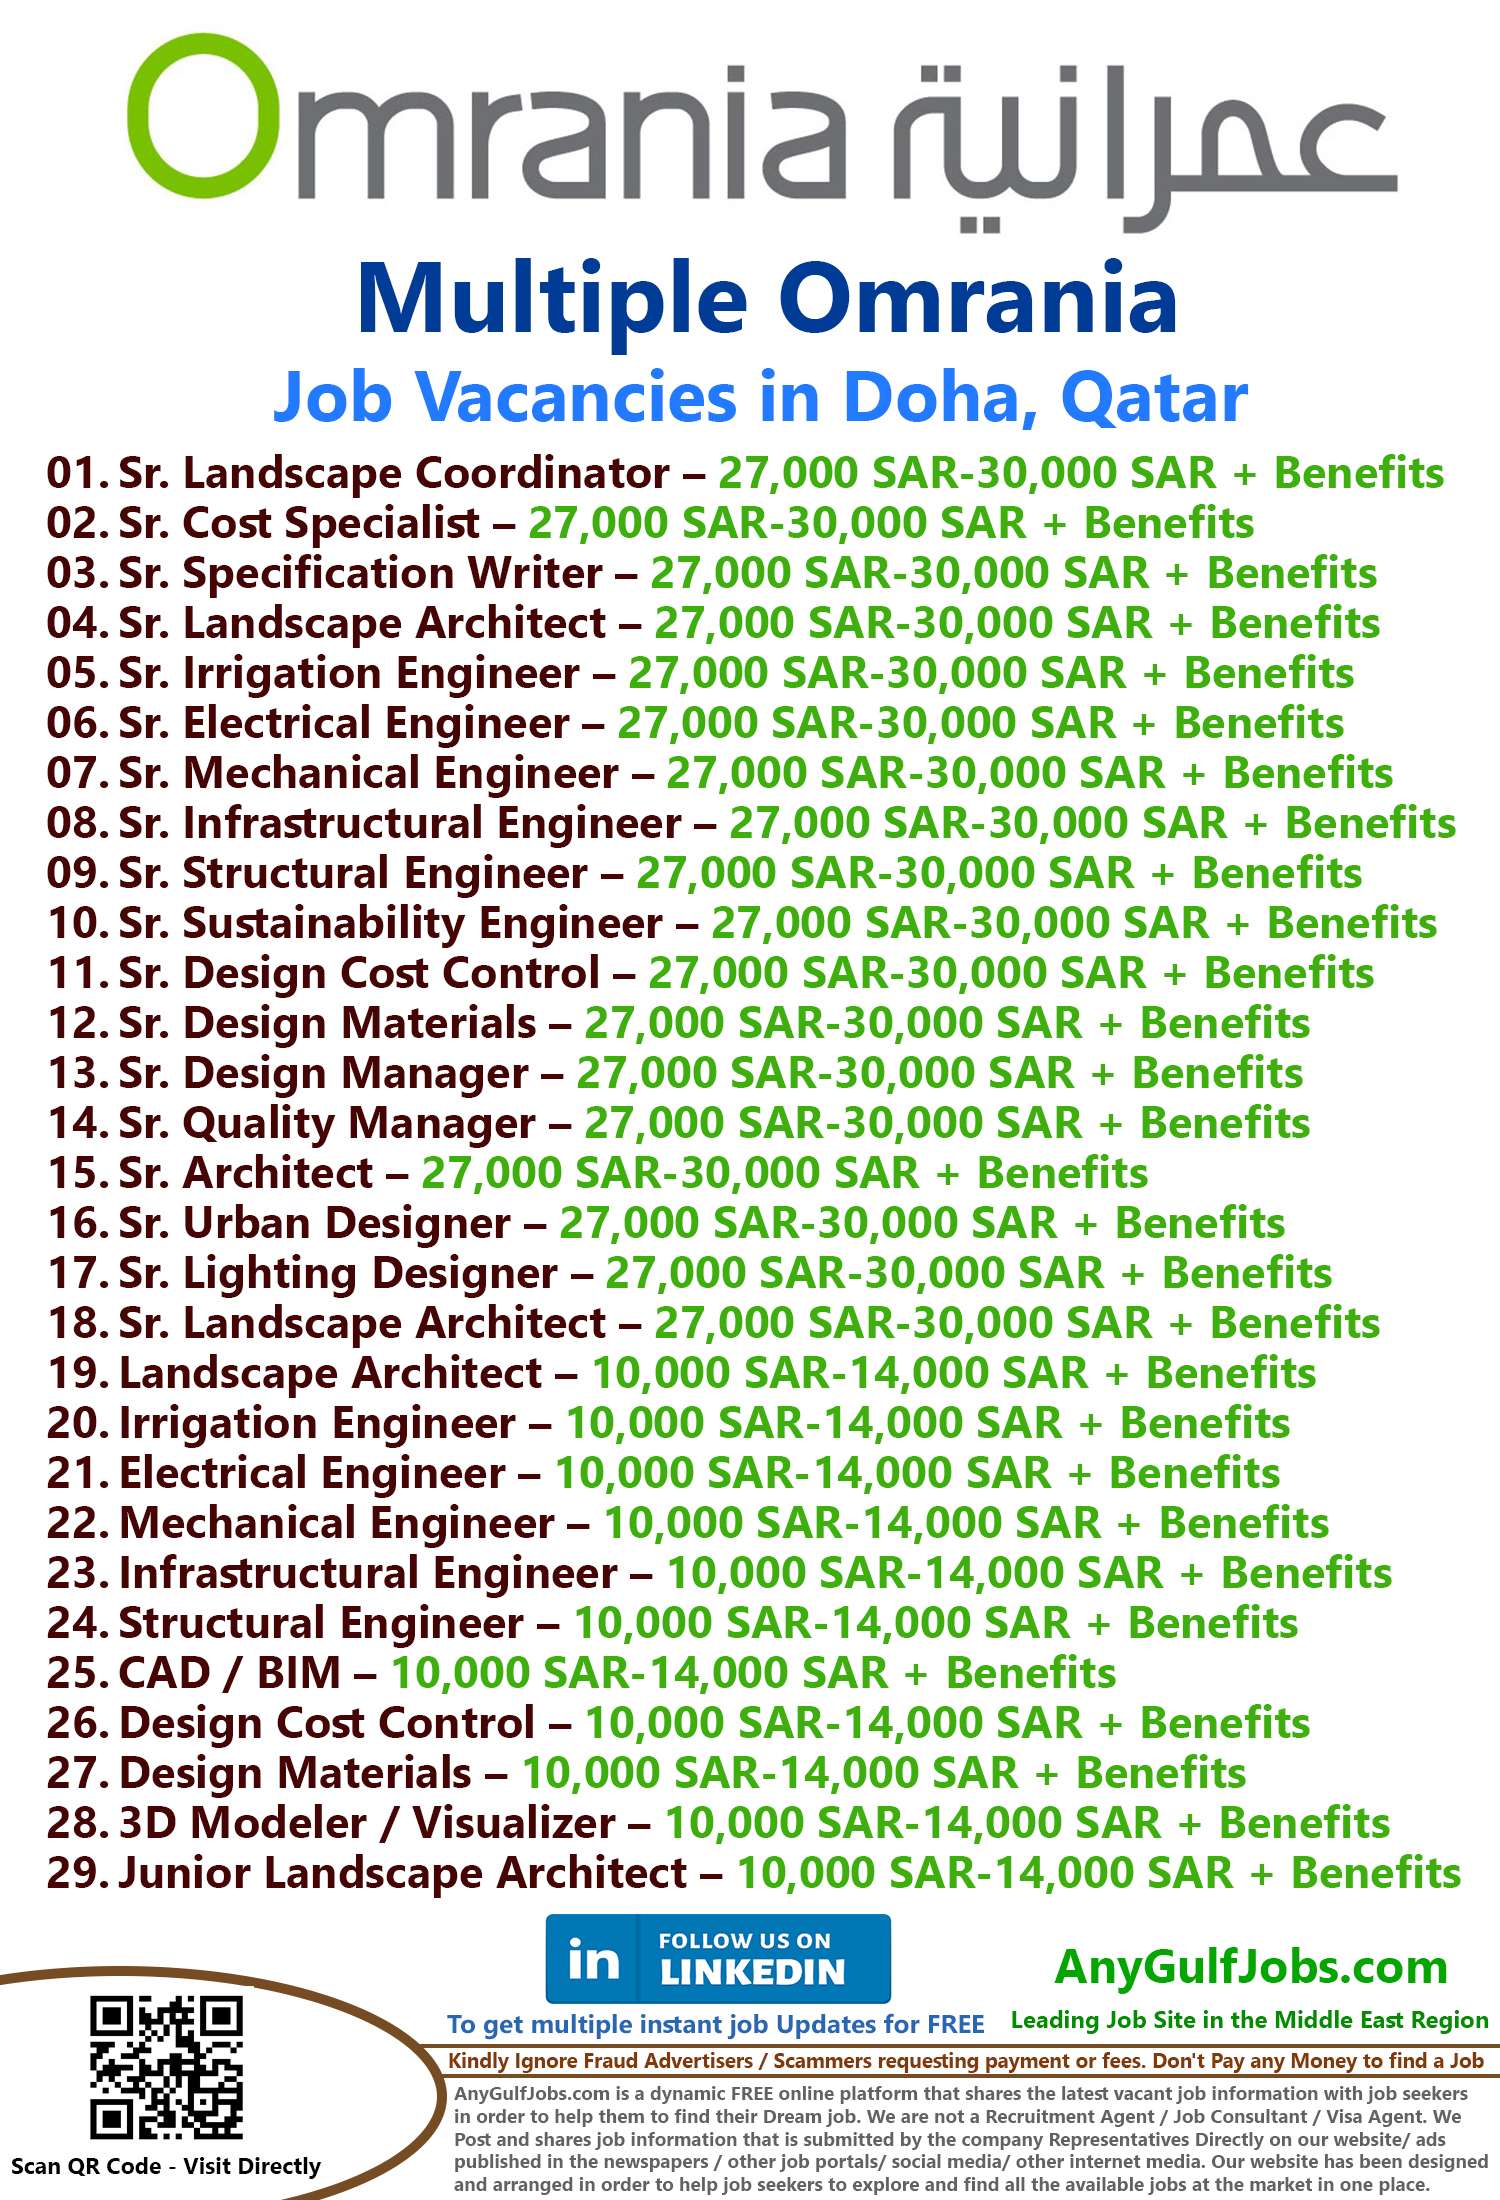 Multiple Omrania Job Vacancies - Riyadh, KSA